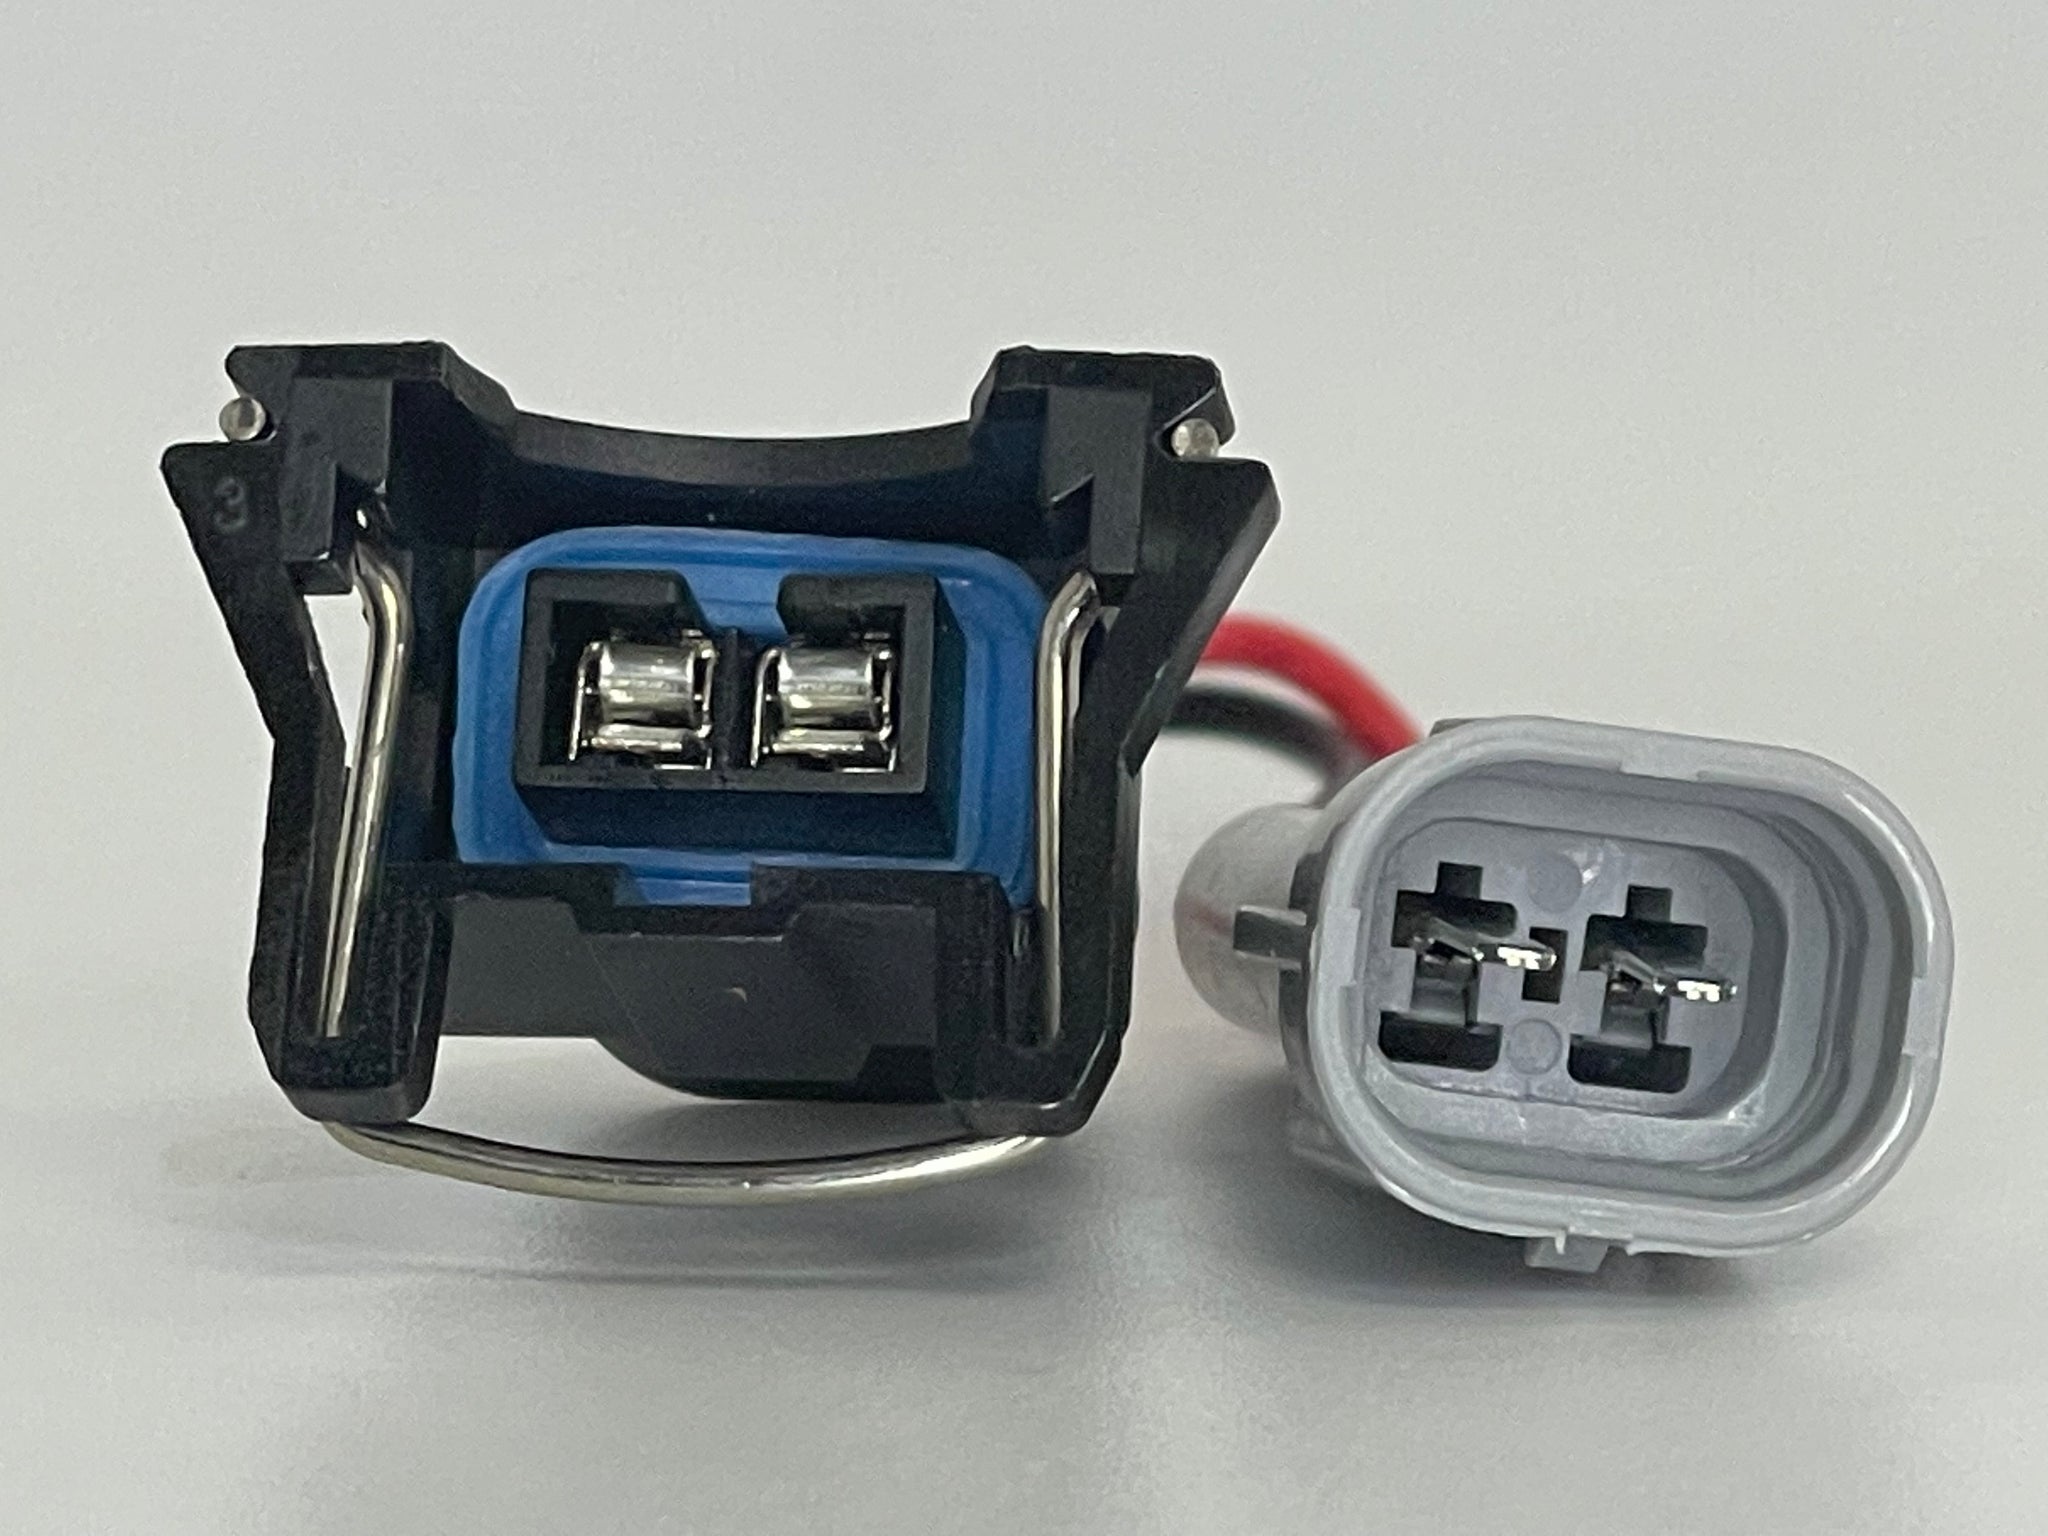 Injector Plug Adapters